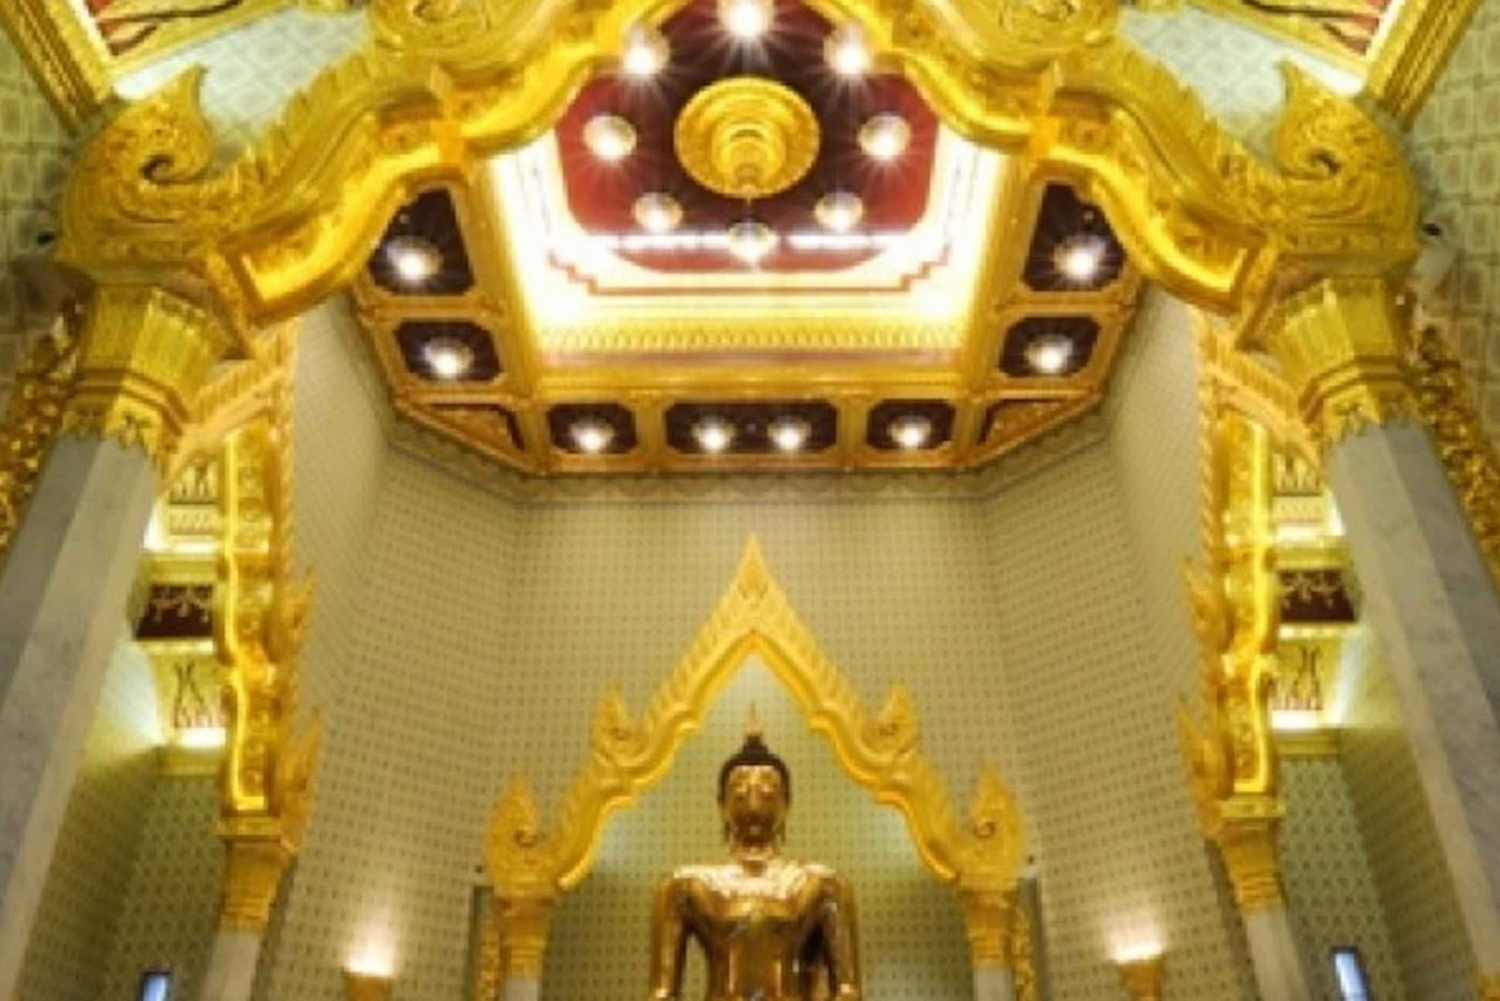 Bangkok: Private Half-Day Temple Tour